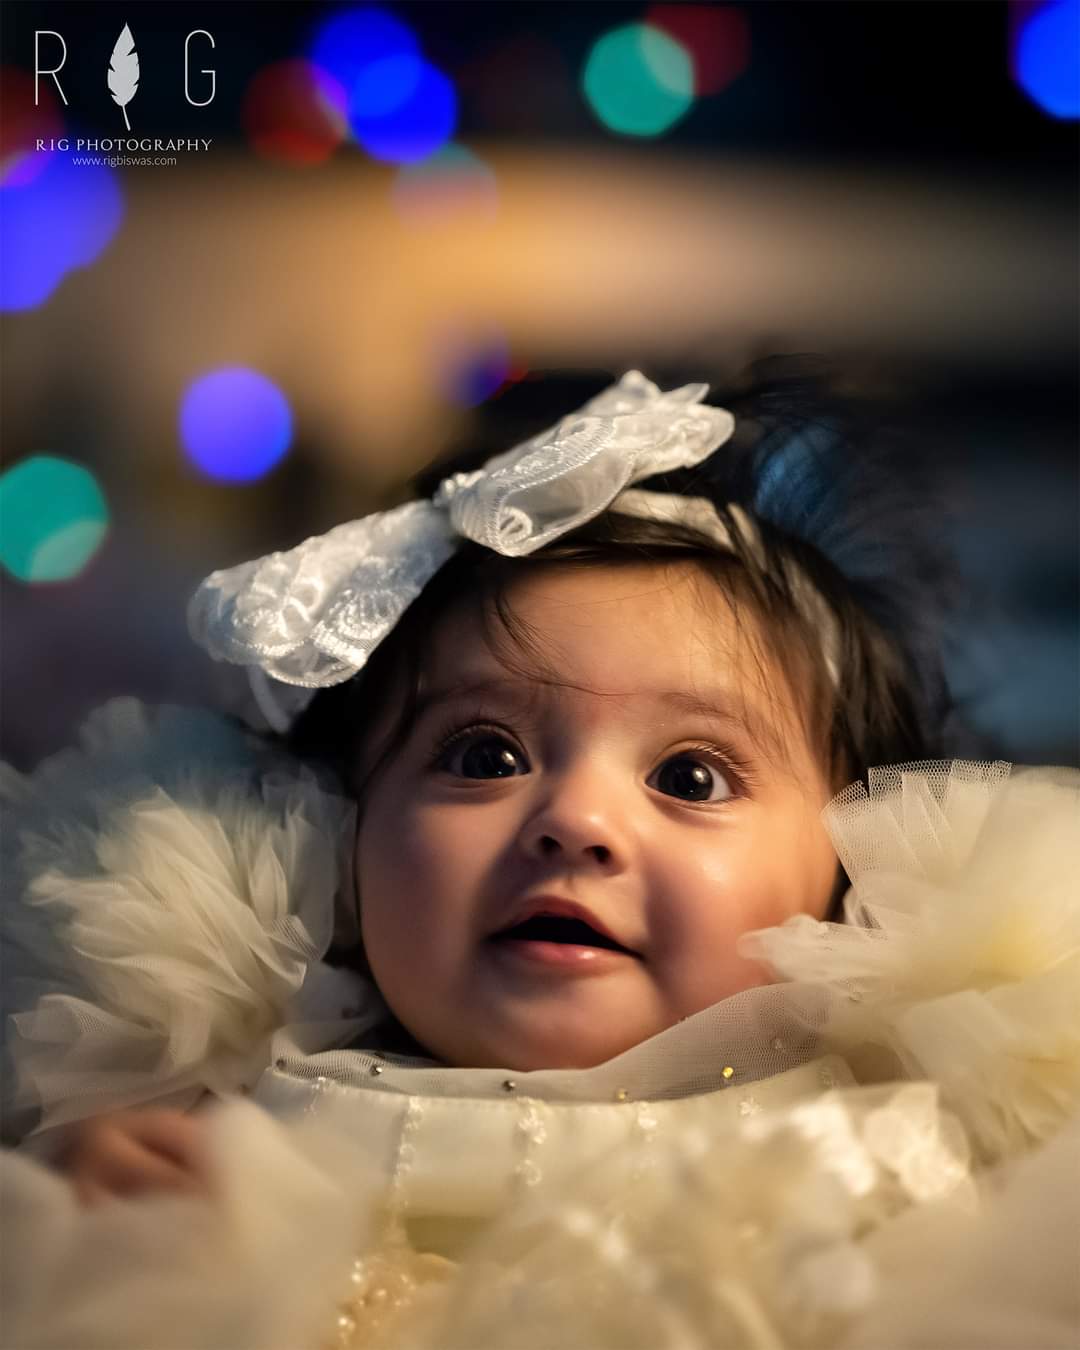 23 days newborn boy at a photoshoot | Edita Photography